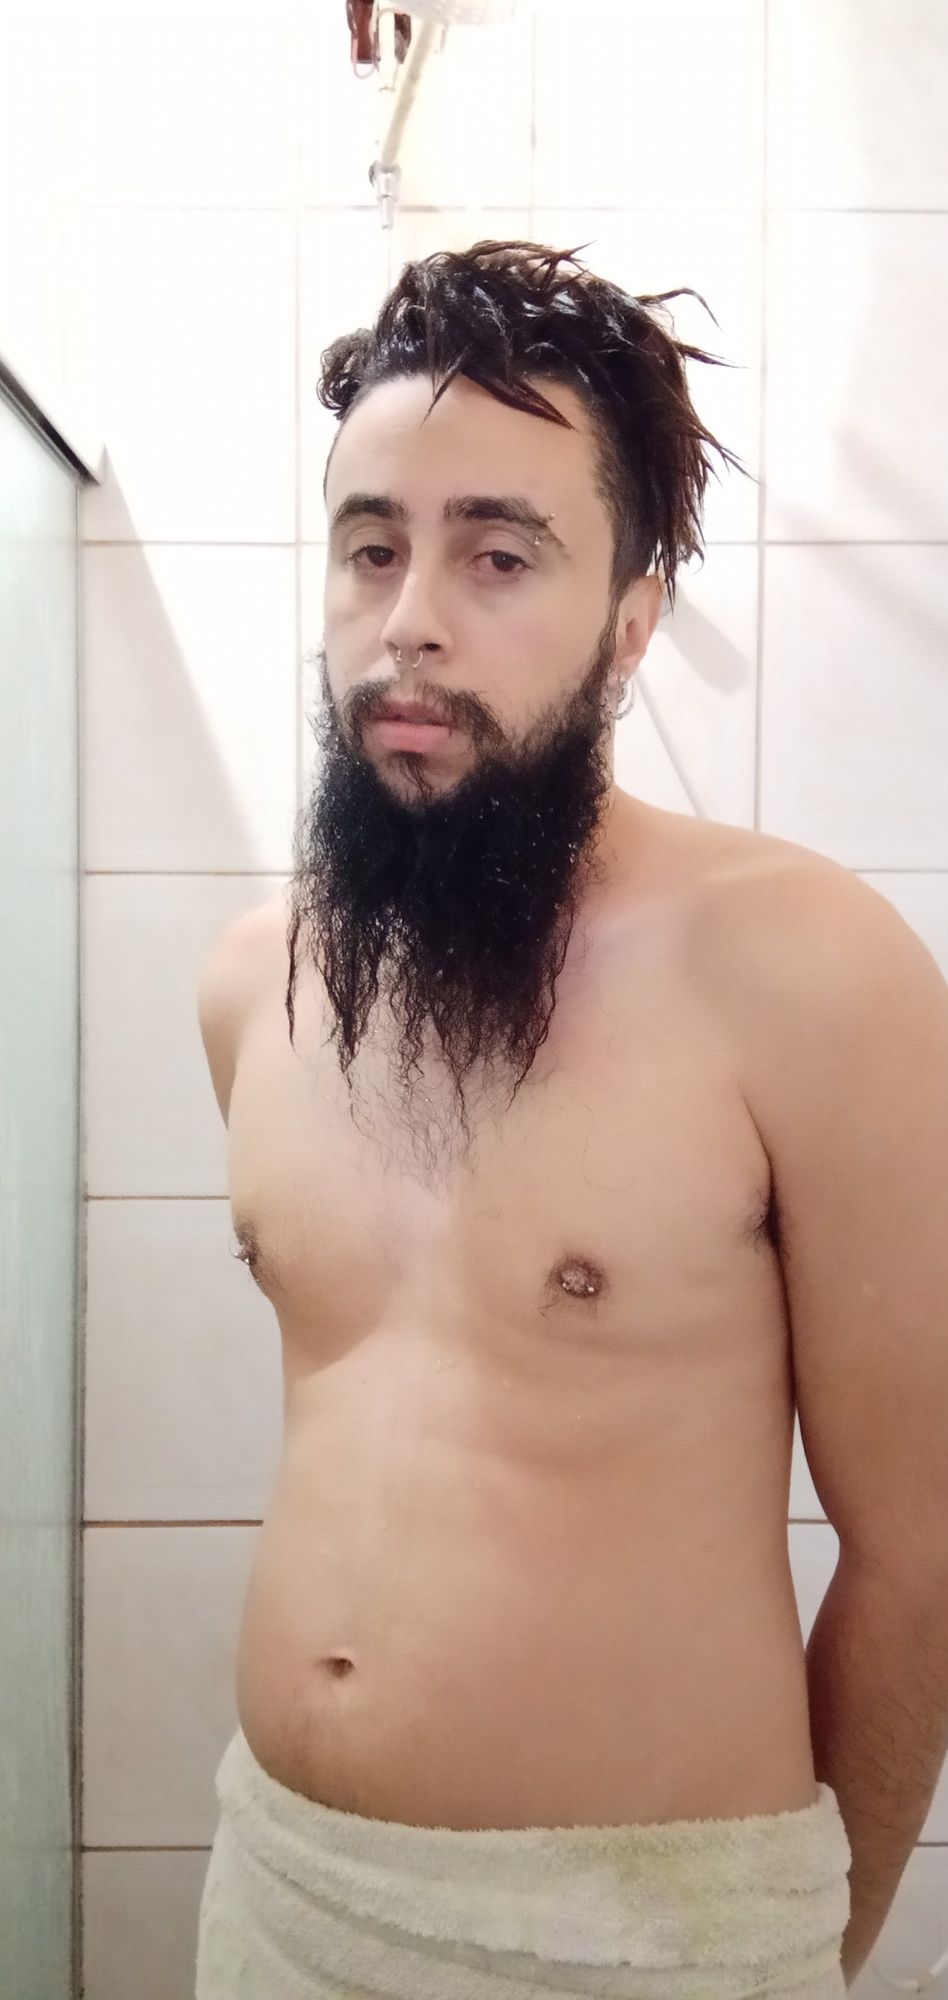 Shower #7